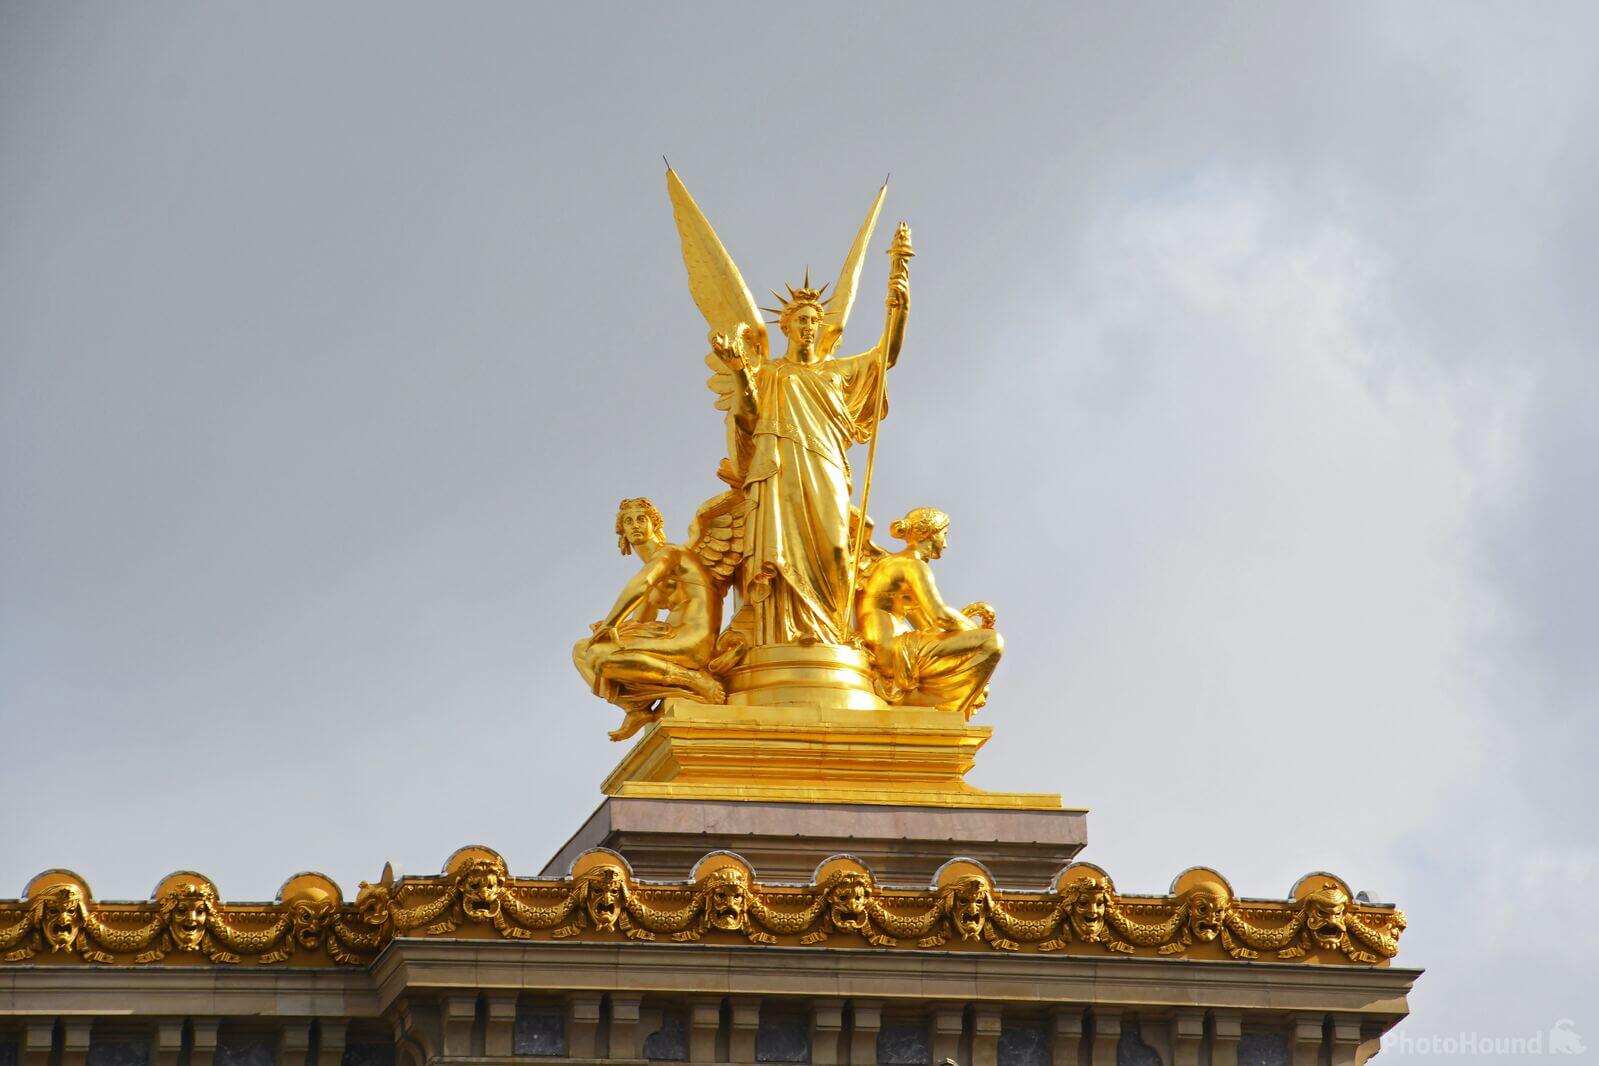 Image of Palais Garnier - Exterior by Team PhotoHound